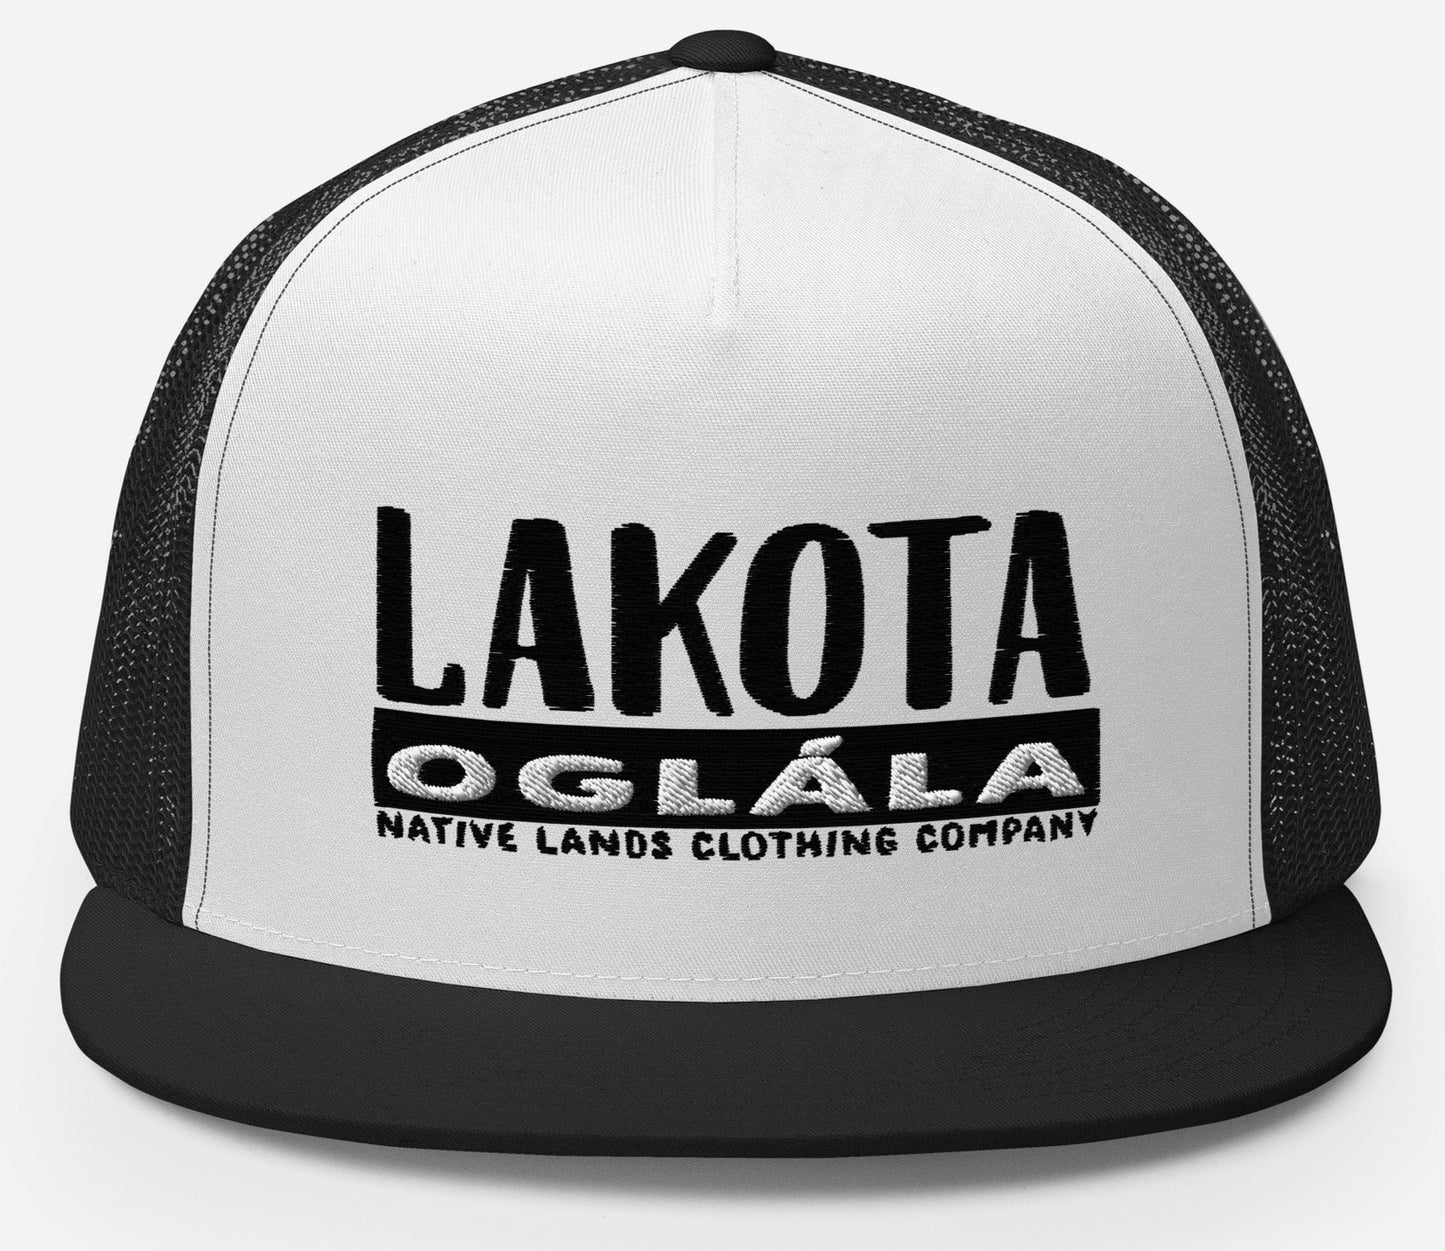 Lakota Oglala Trucker Hat Embroidered Native American $ 17.50 Baseball Cap Native Lands Clothing Company LLC